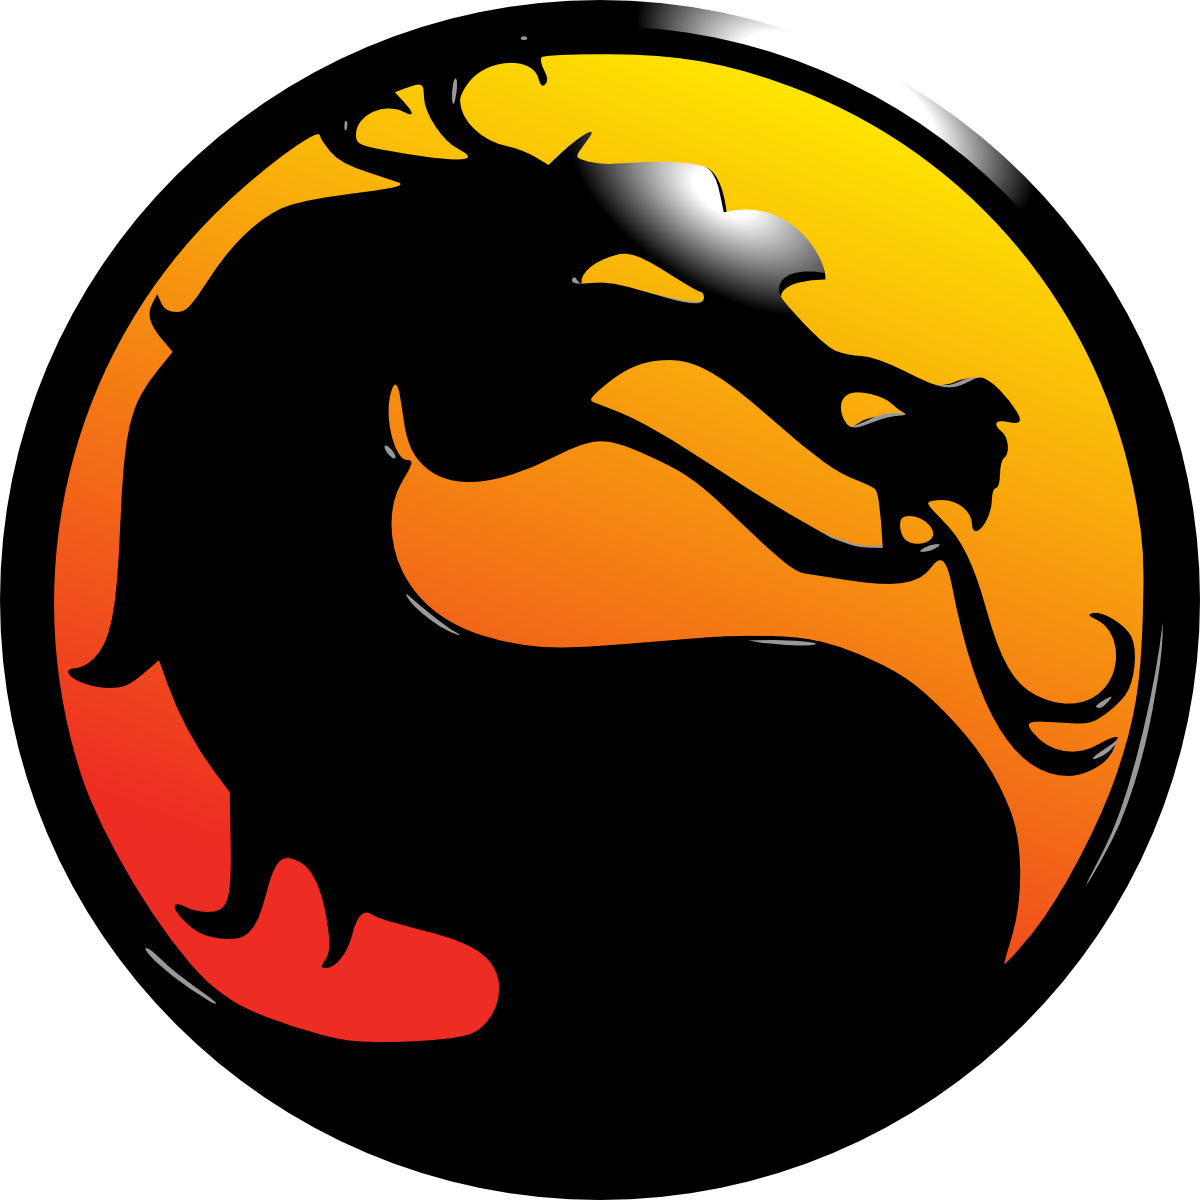 Mortal kombat logo Wallpaper